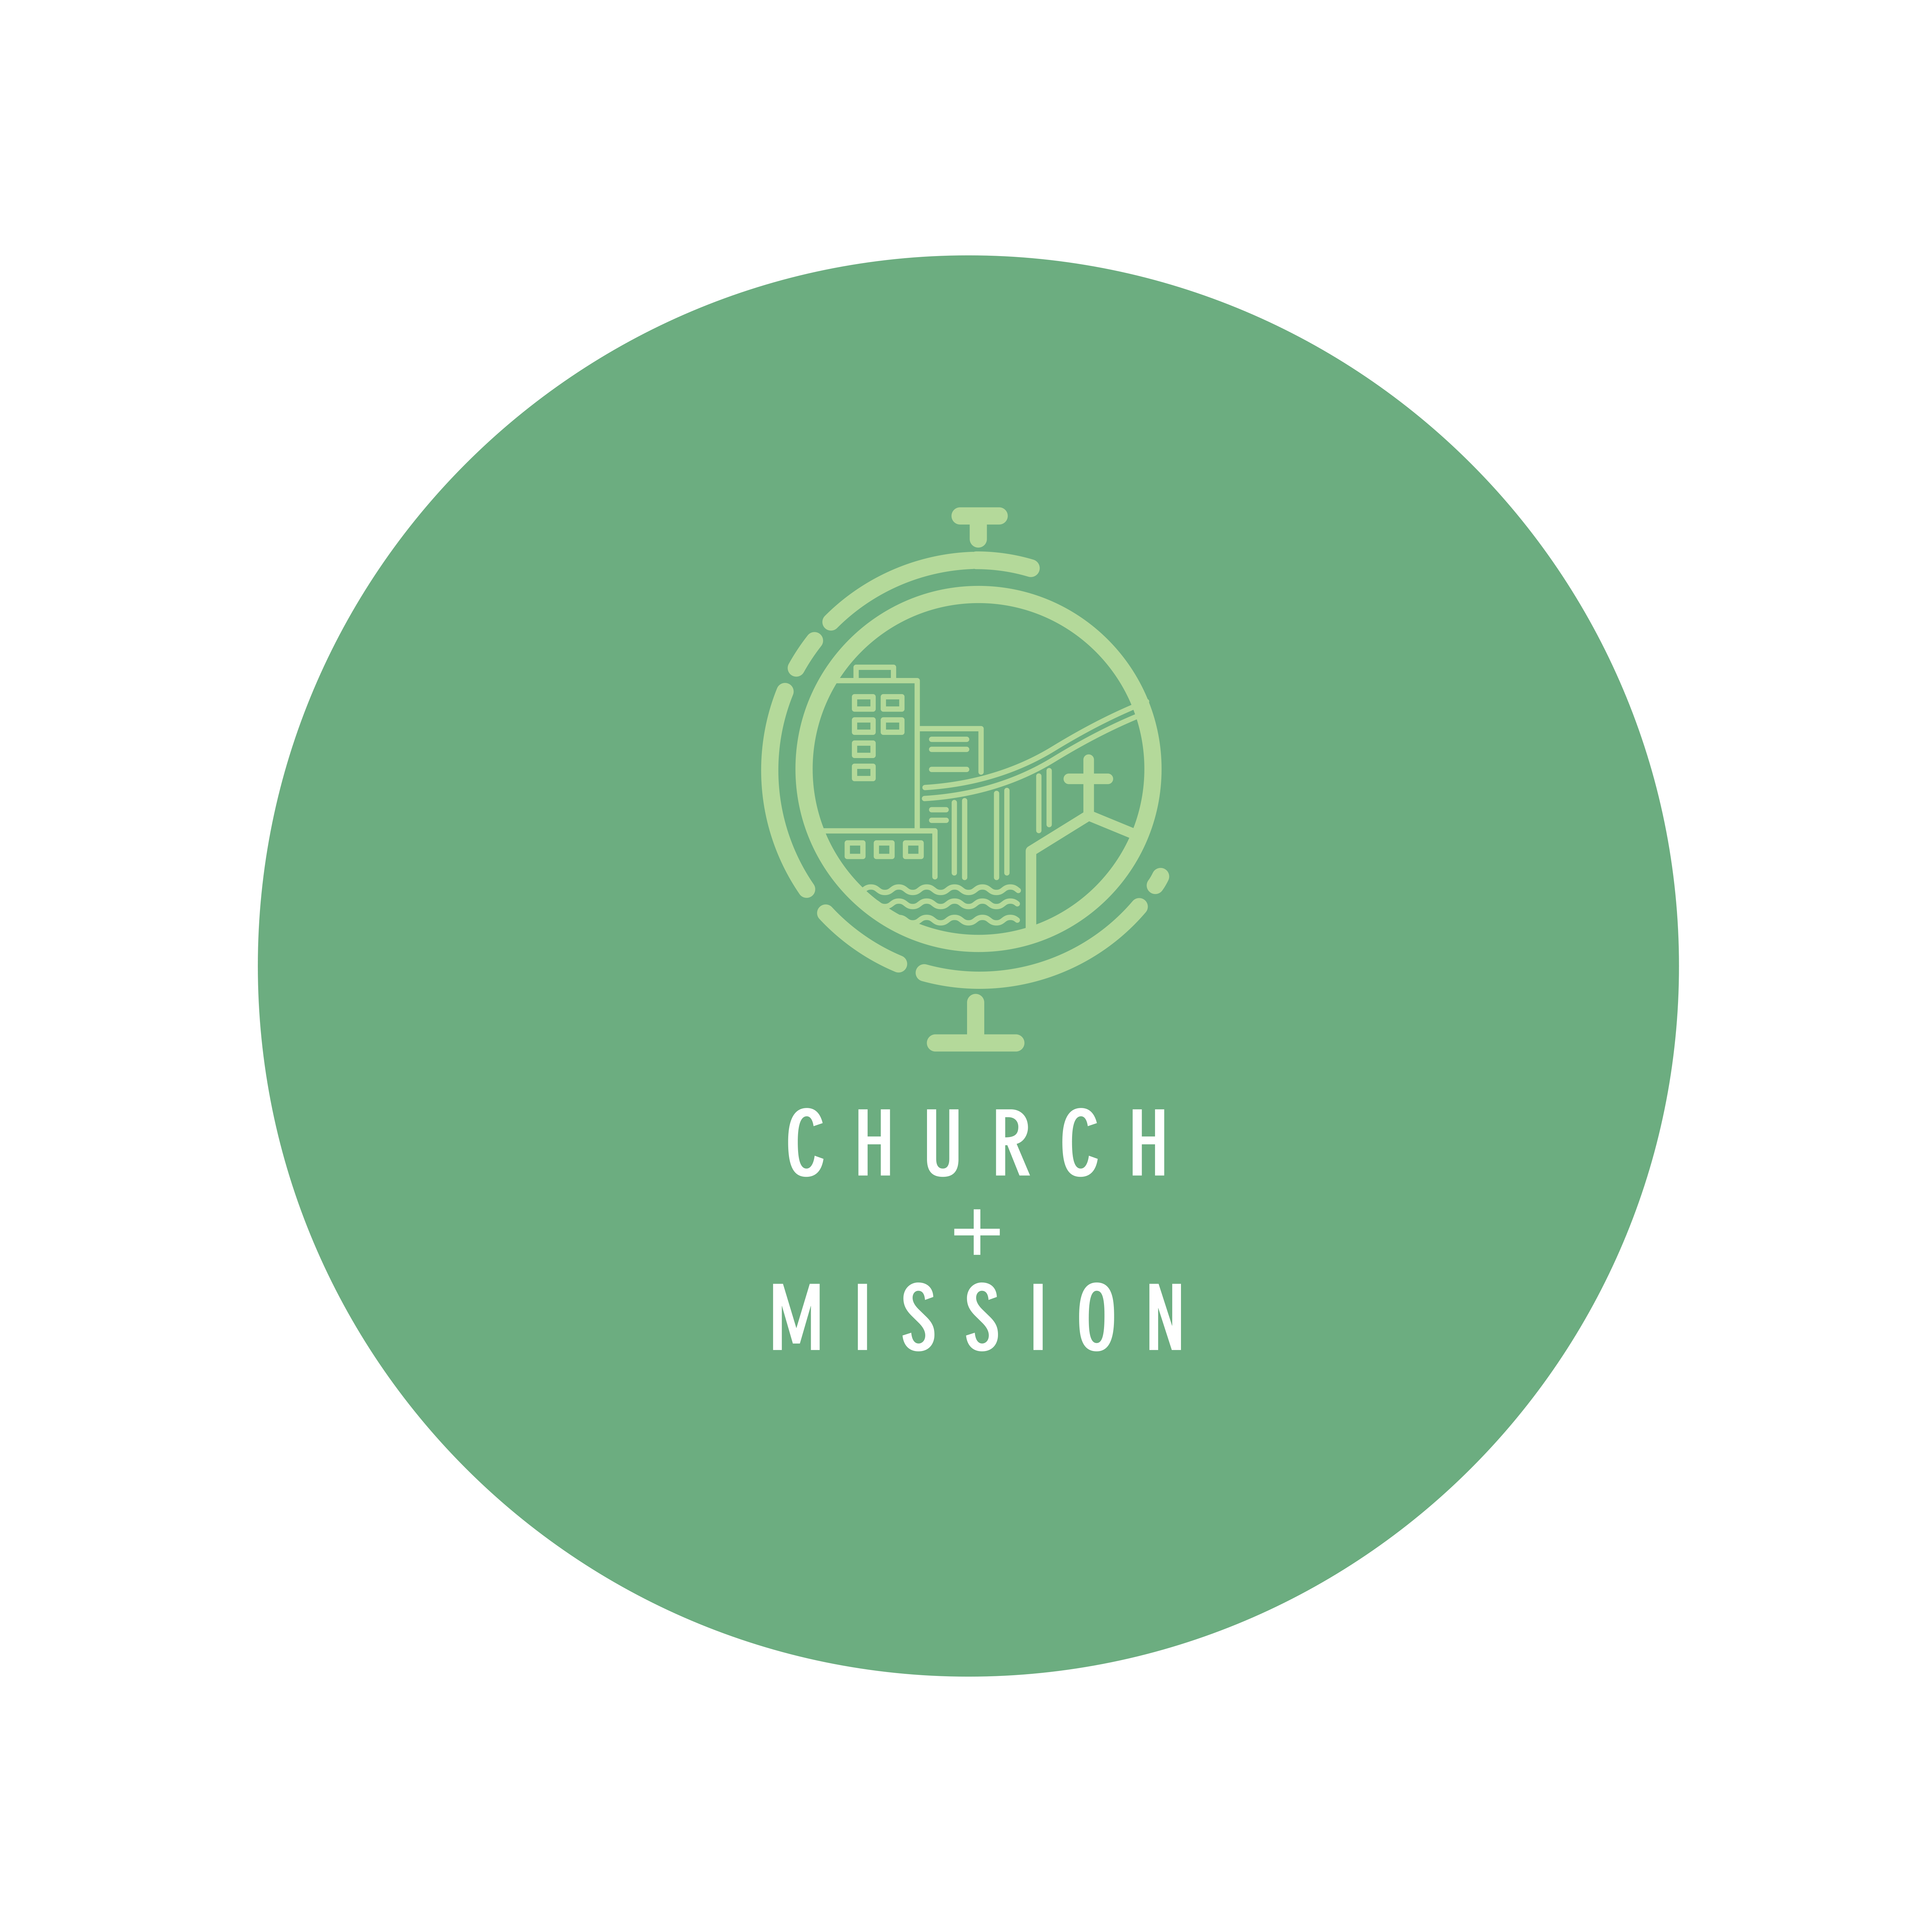 Redeemer_Sphere_Church+Mission